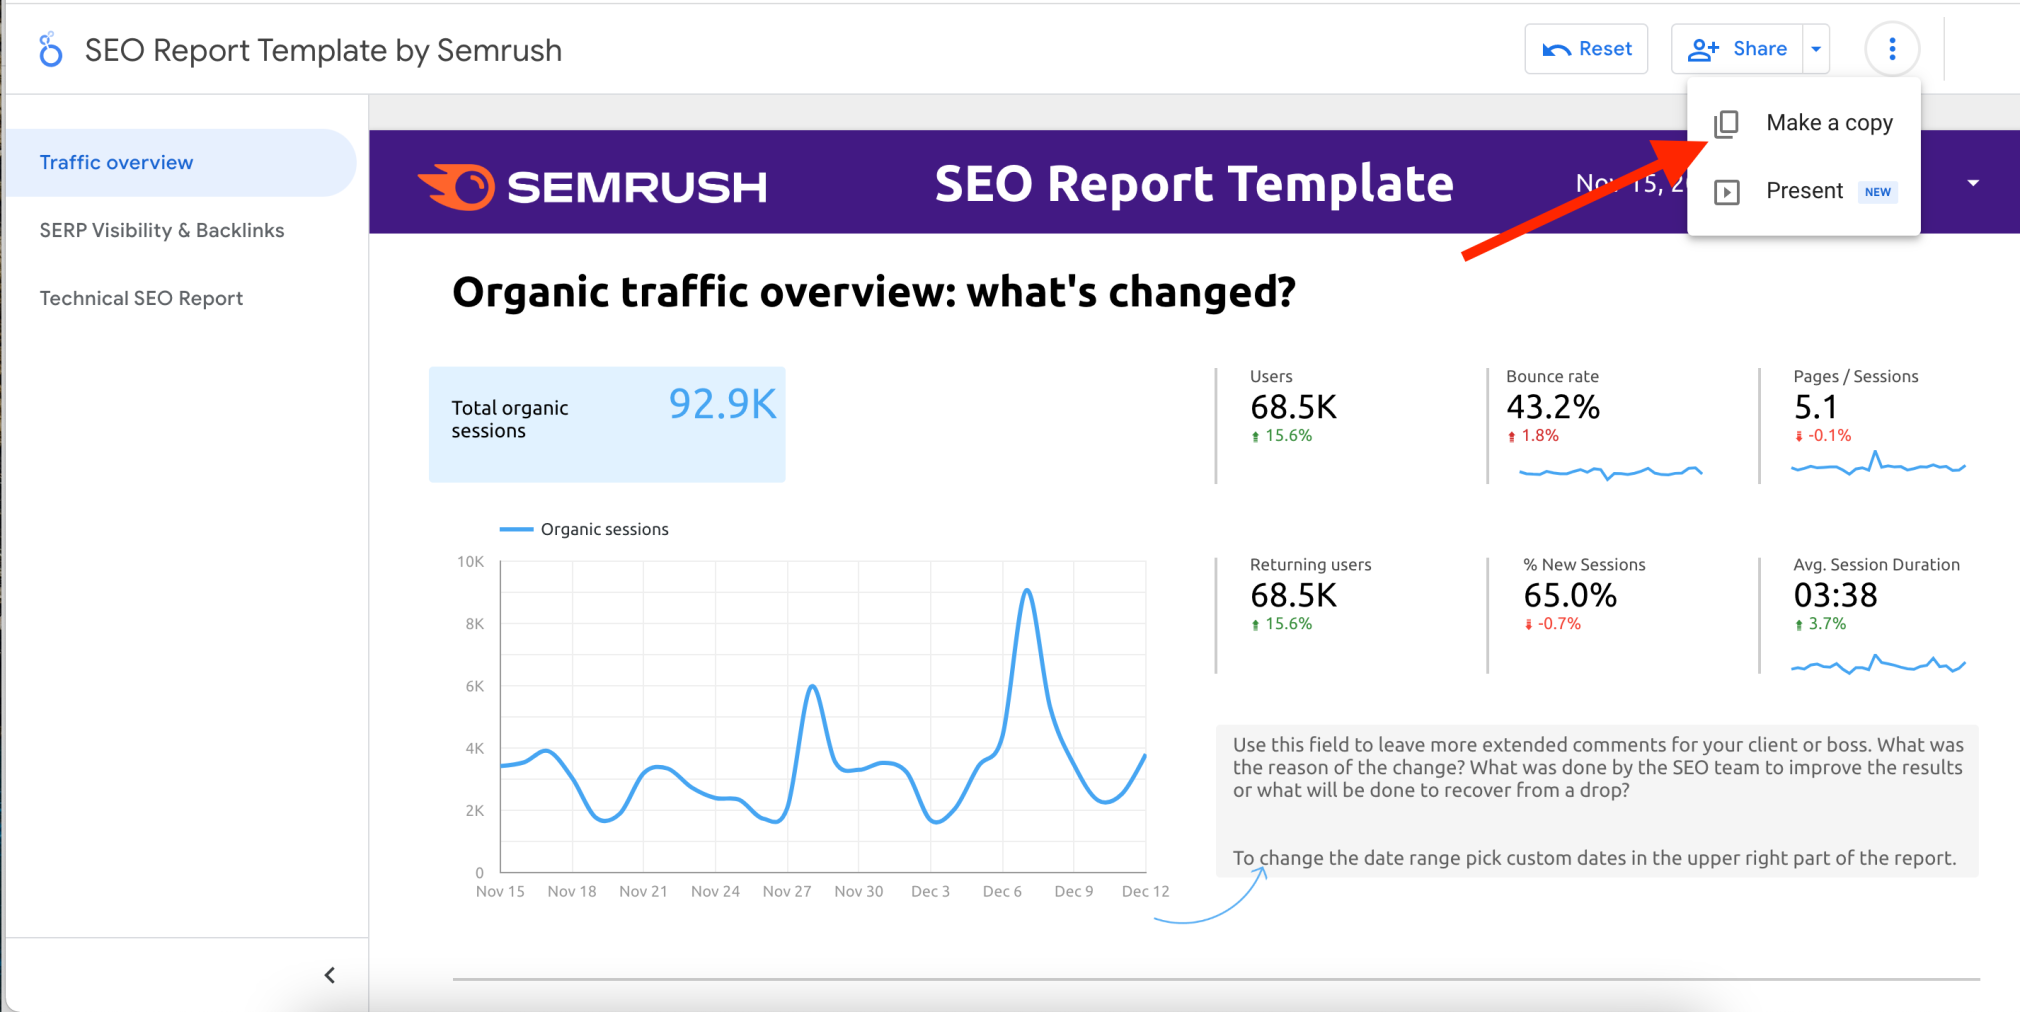 Google Data Studio Template: A Complete SEO Report by Semrush